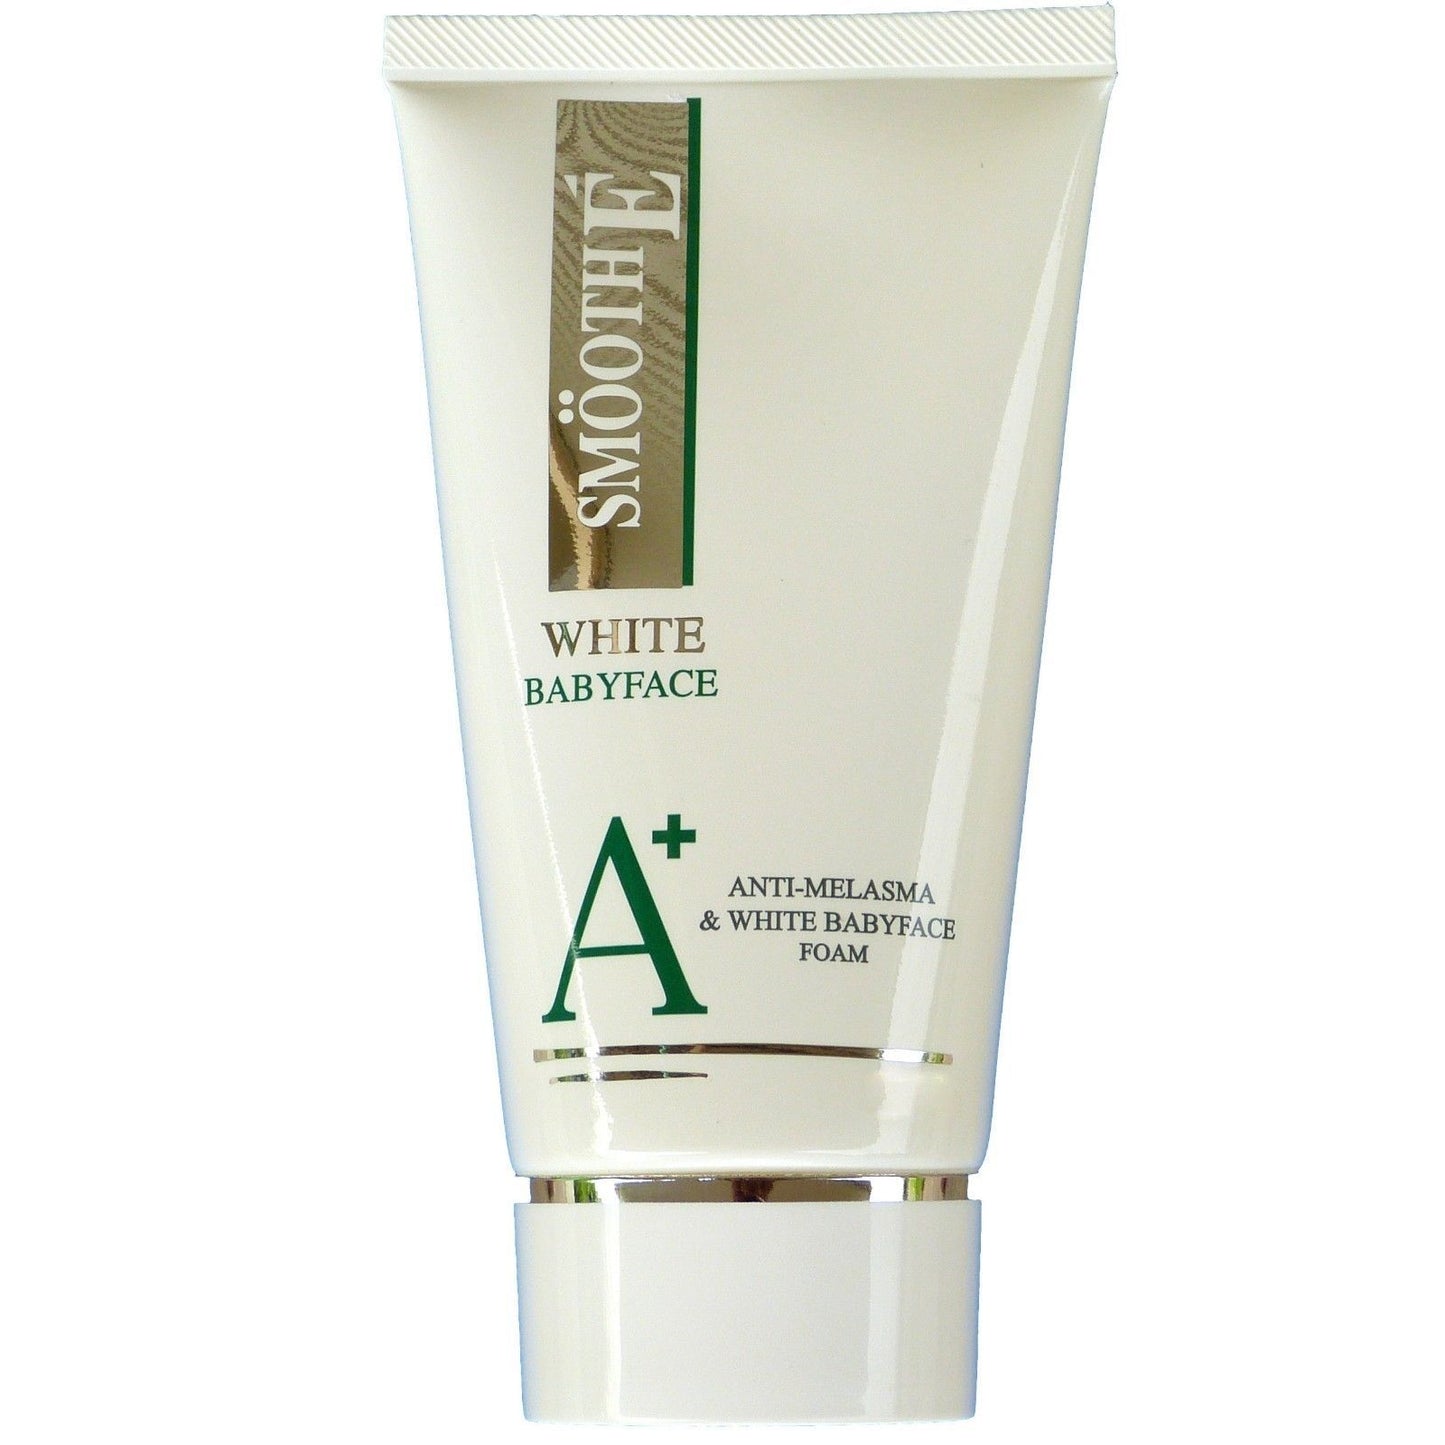 Smooth E White Babyface A+ Anti Melasma Skin Whitening Facial Foam 4 oz - Asian Beauty Supply